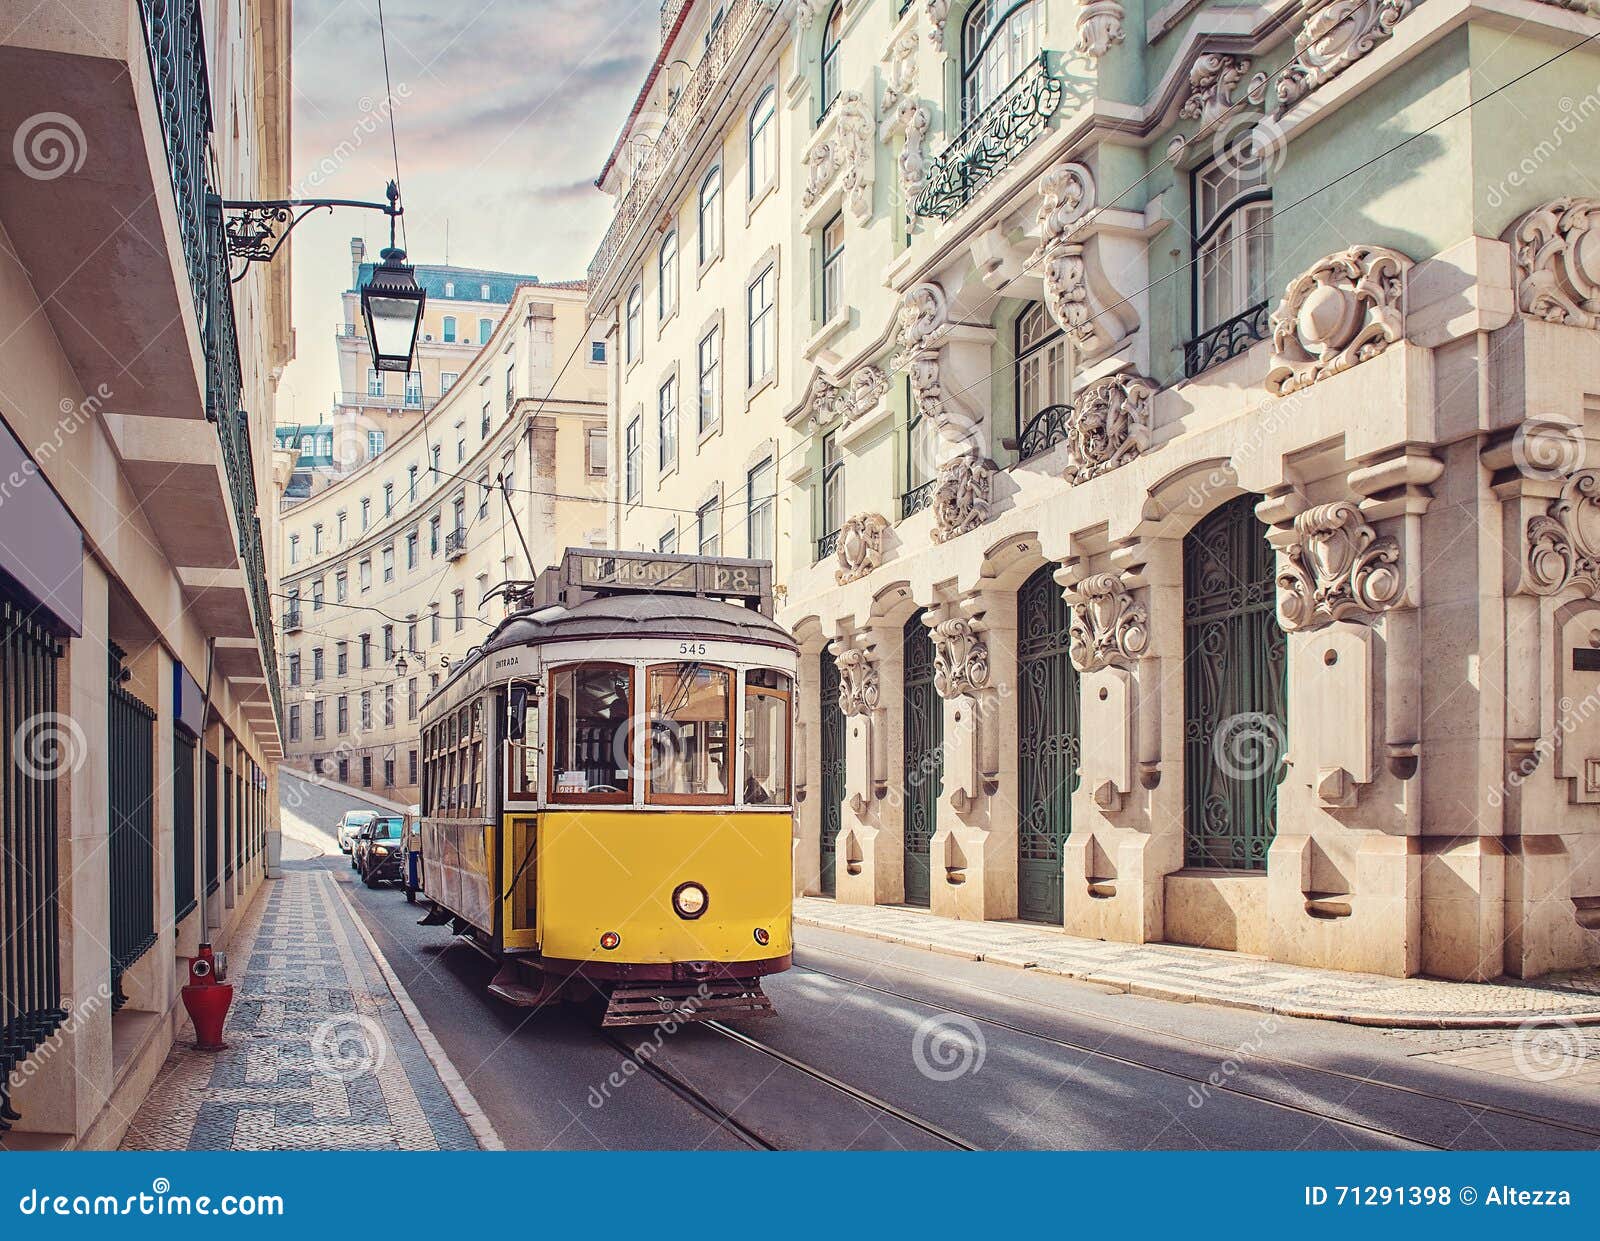 yellow tram in lisbon, portugal